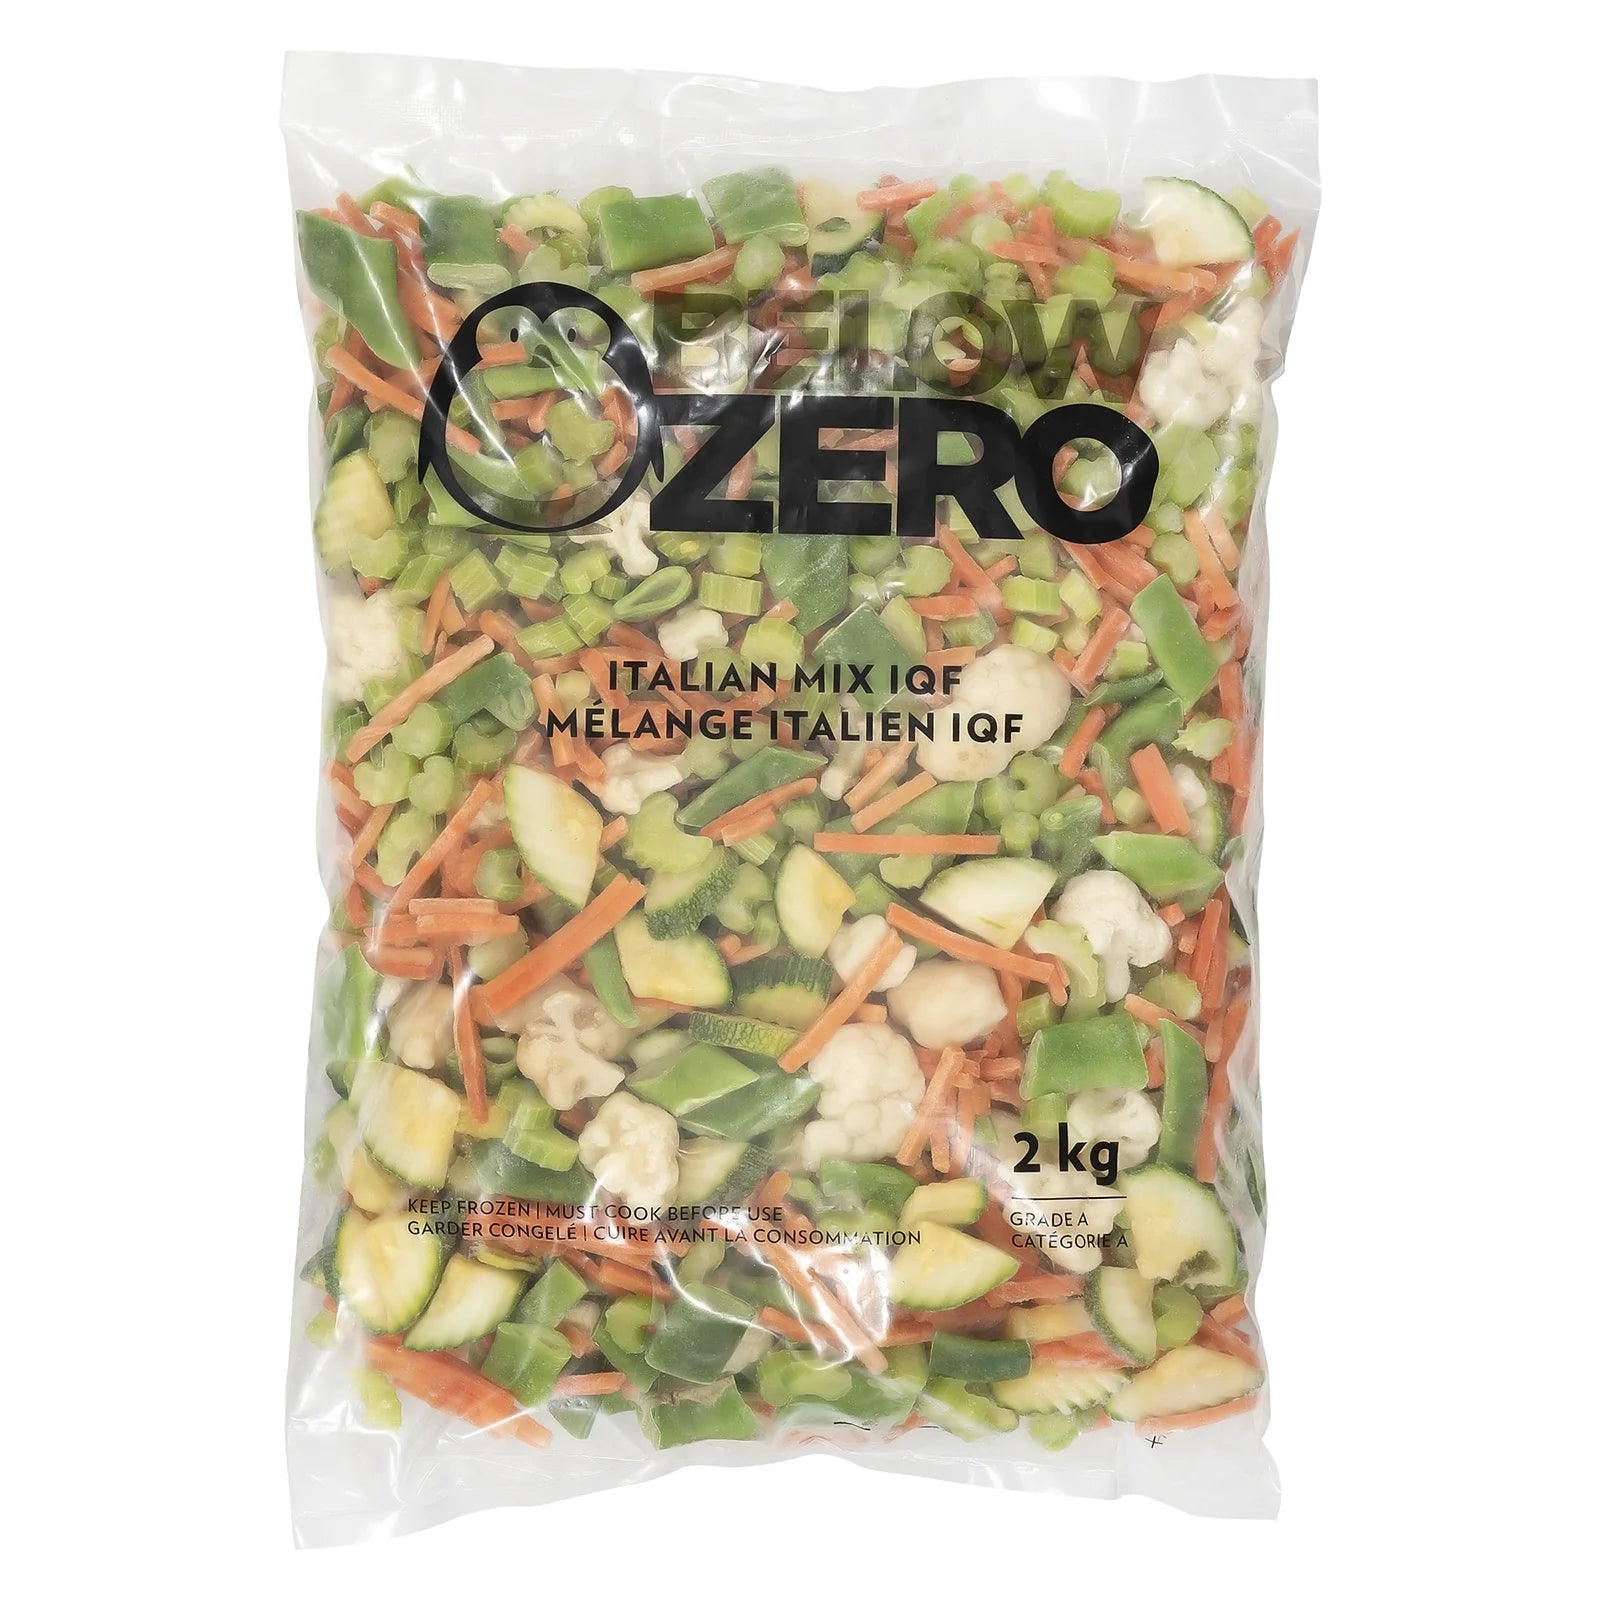 Below Zero - IQF Italian Mixed Vegetables